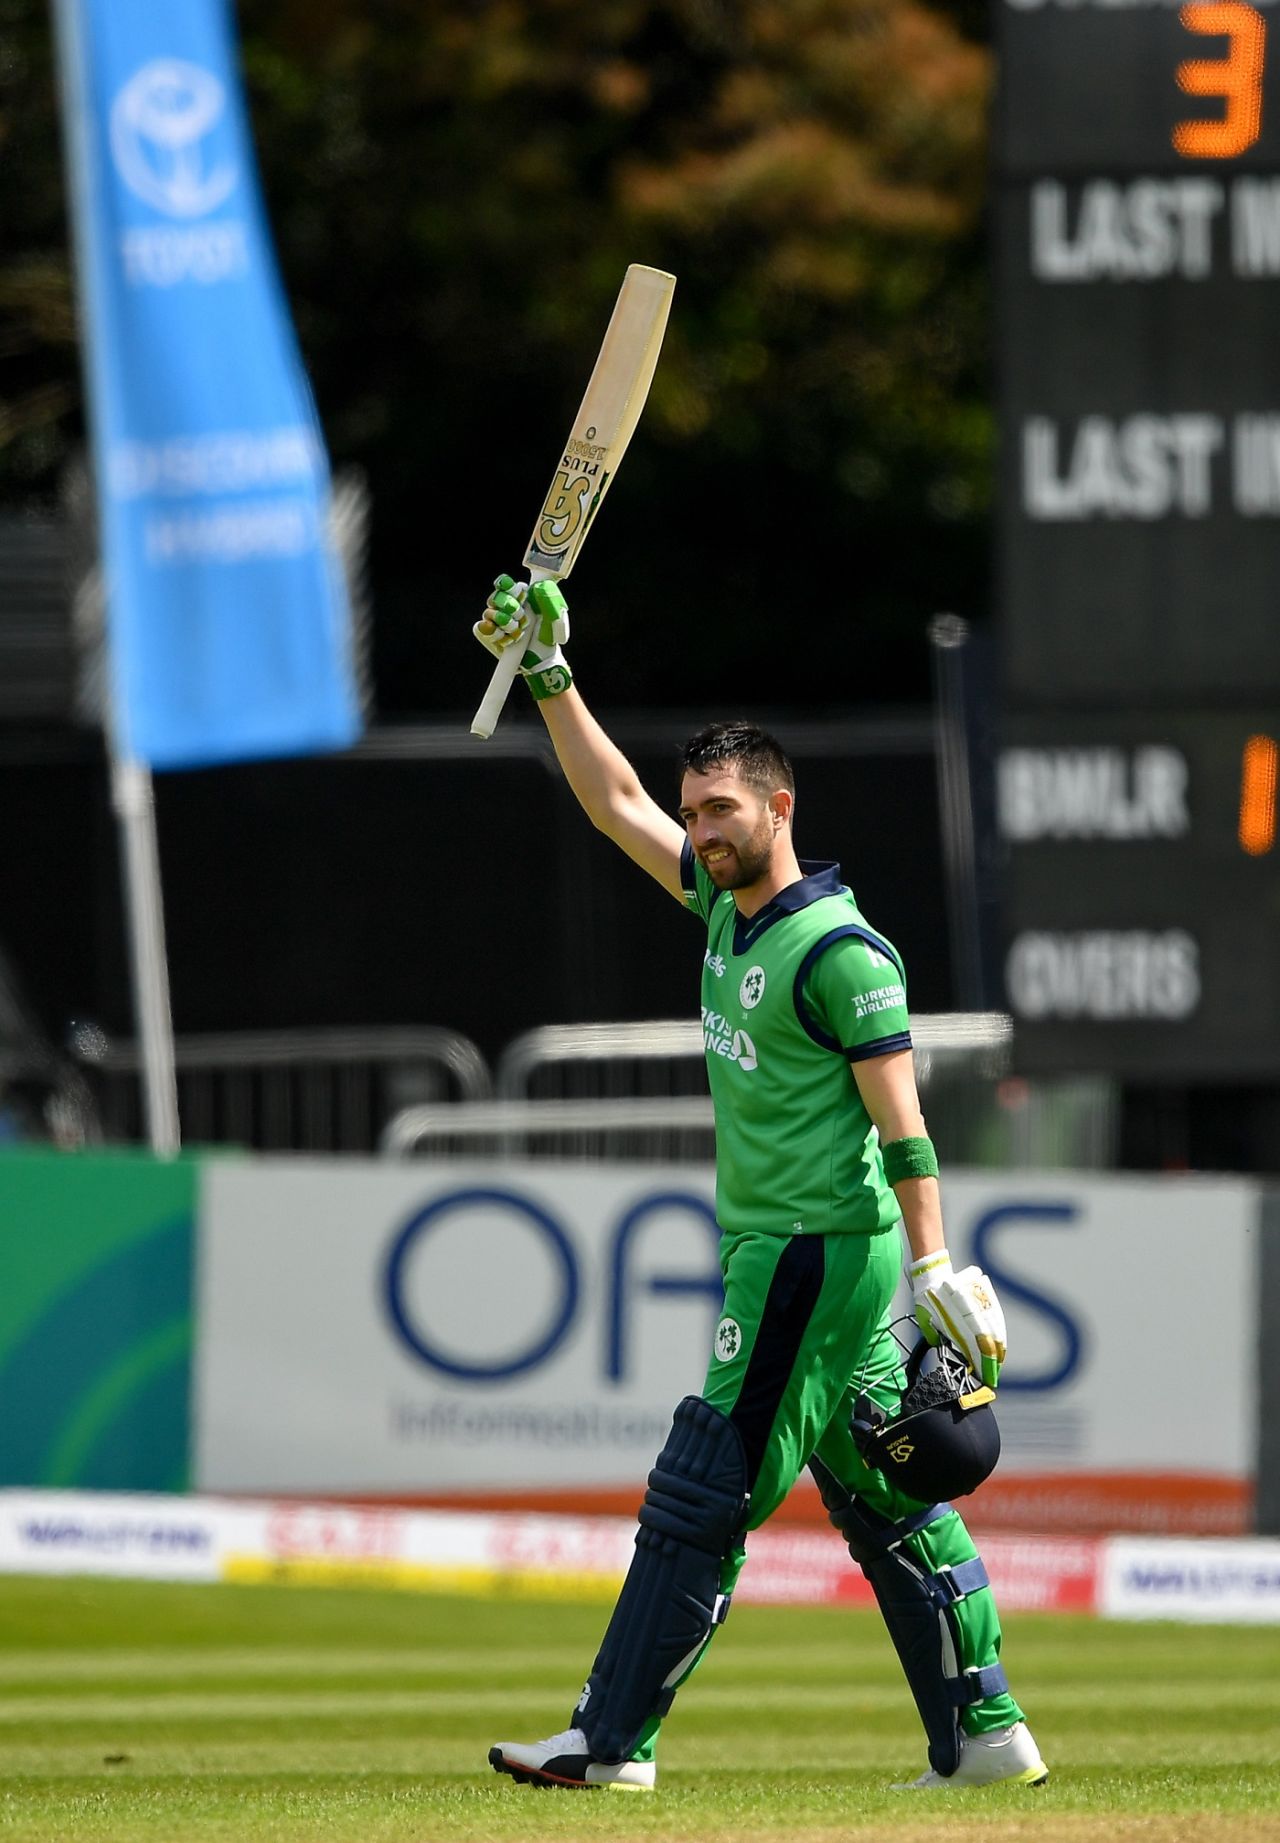 Andy Balbirnie raises his bat after a fine century, Ireland v West Indies, Match 4, Ireland tri-series, Dublin, May 11, 2019